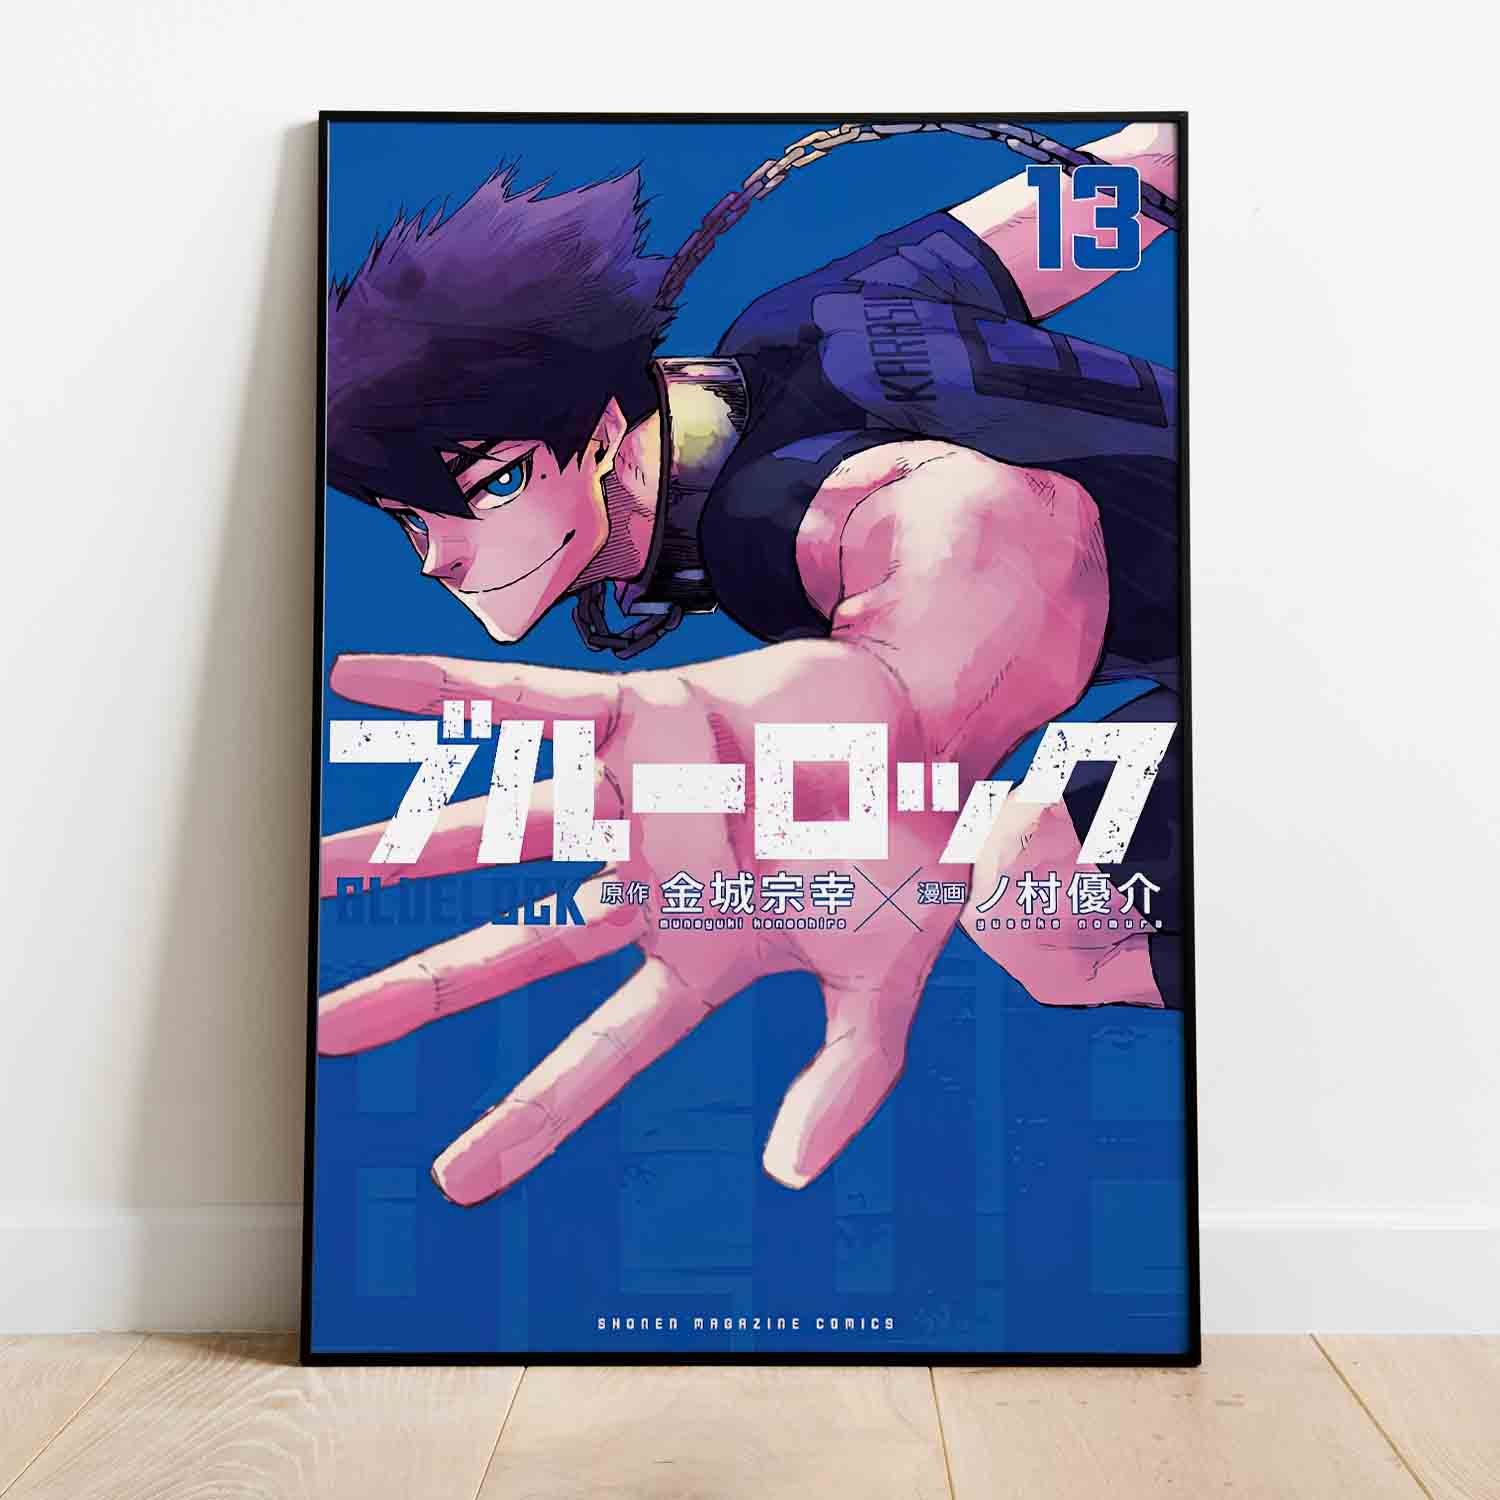 Karasu Wanted Poster  Mangá one piece, One piece, Anime